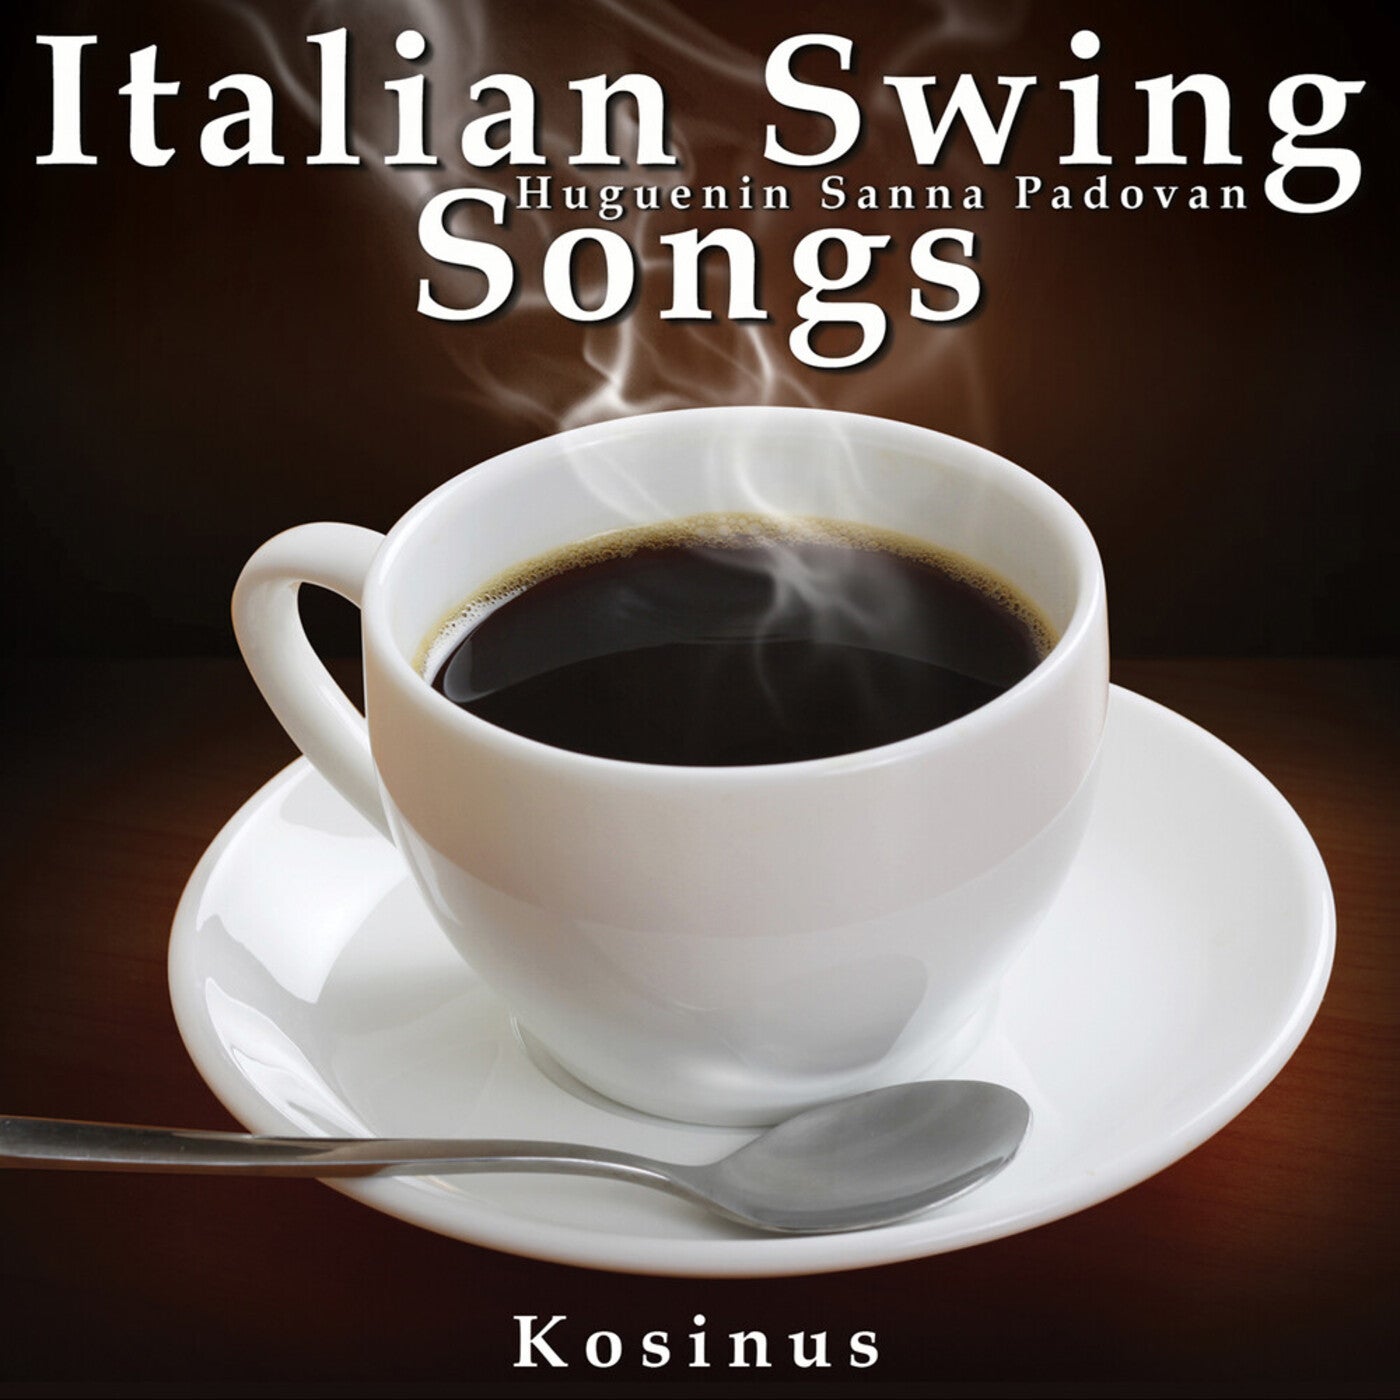 Italian Swing Songs by Stephane Huguenin, Christian Padovan and Yves Sanna  on Beatsource